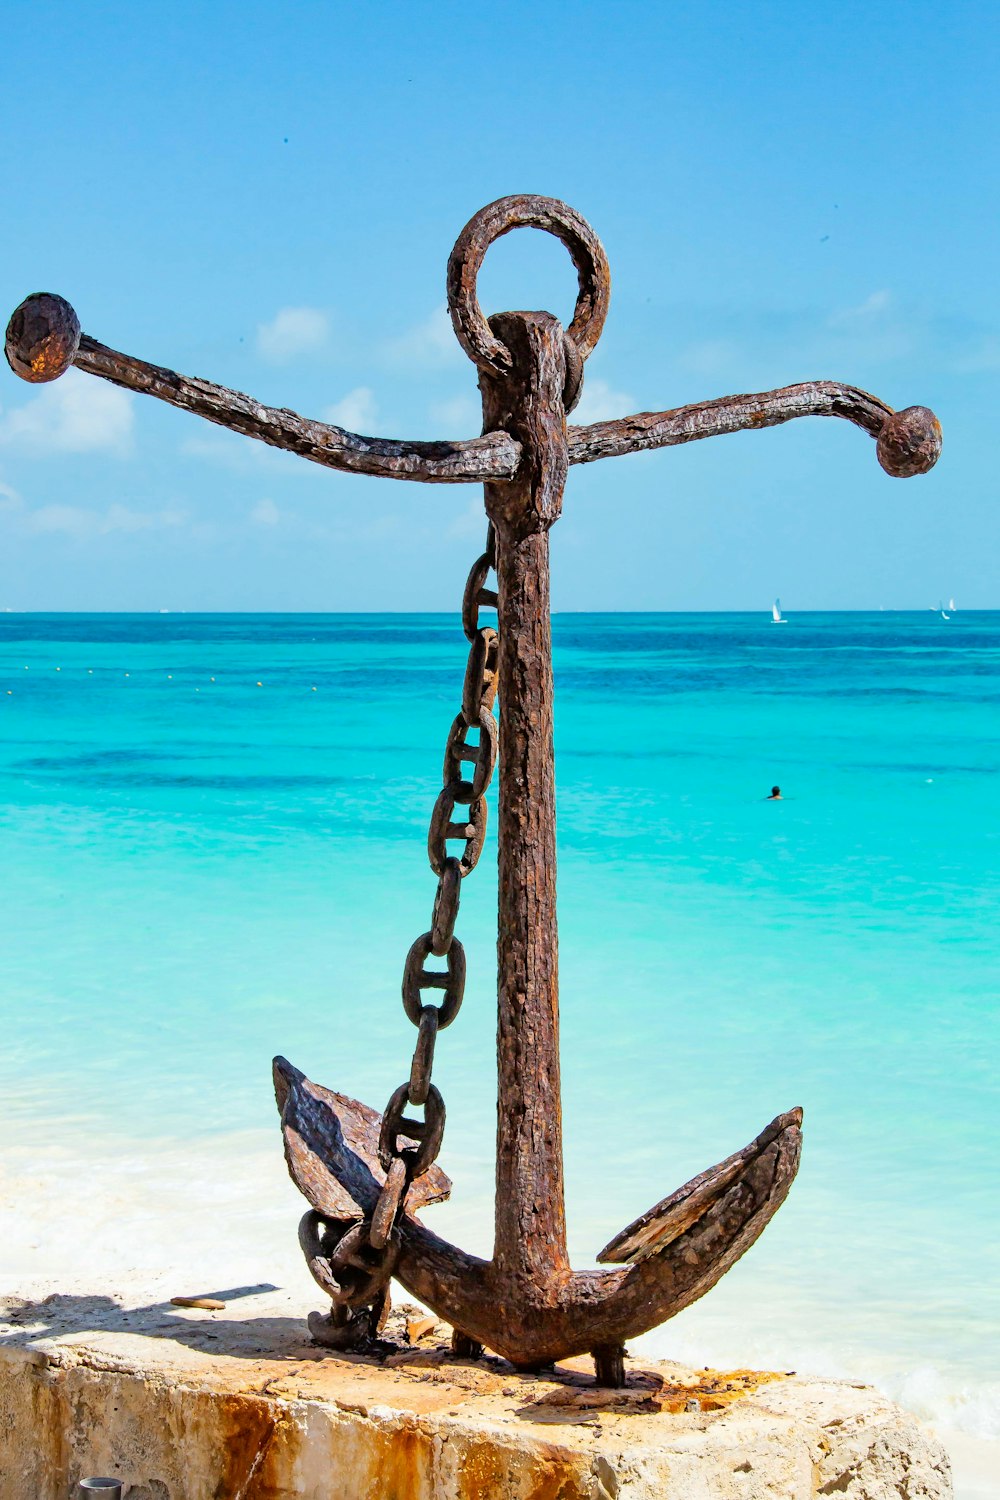 blue metal chain near sea during daytime